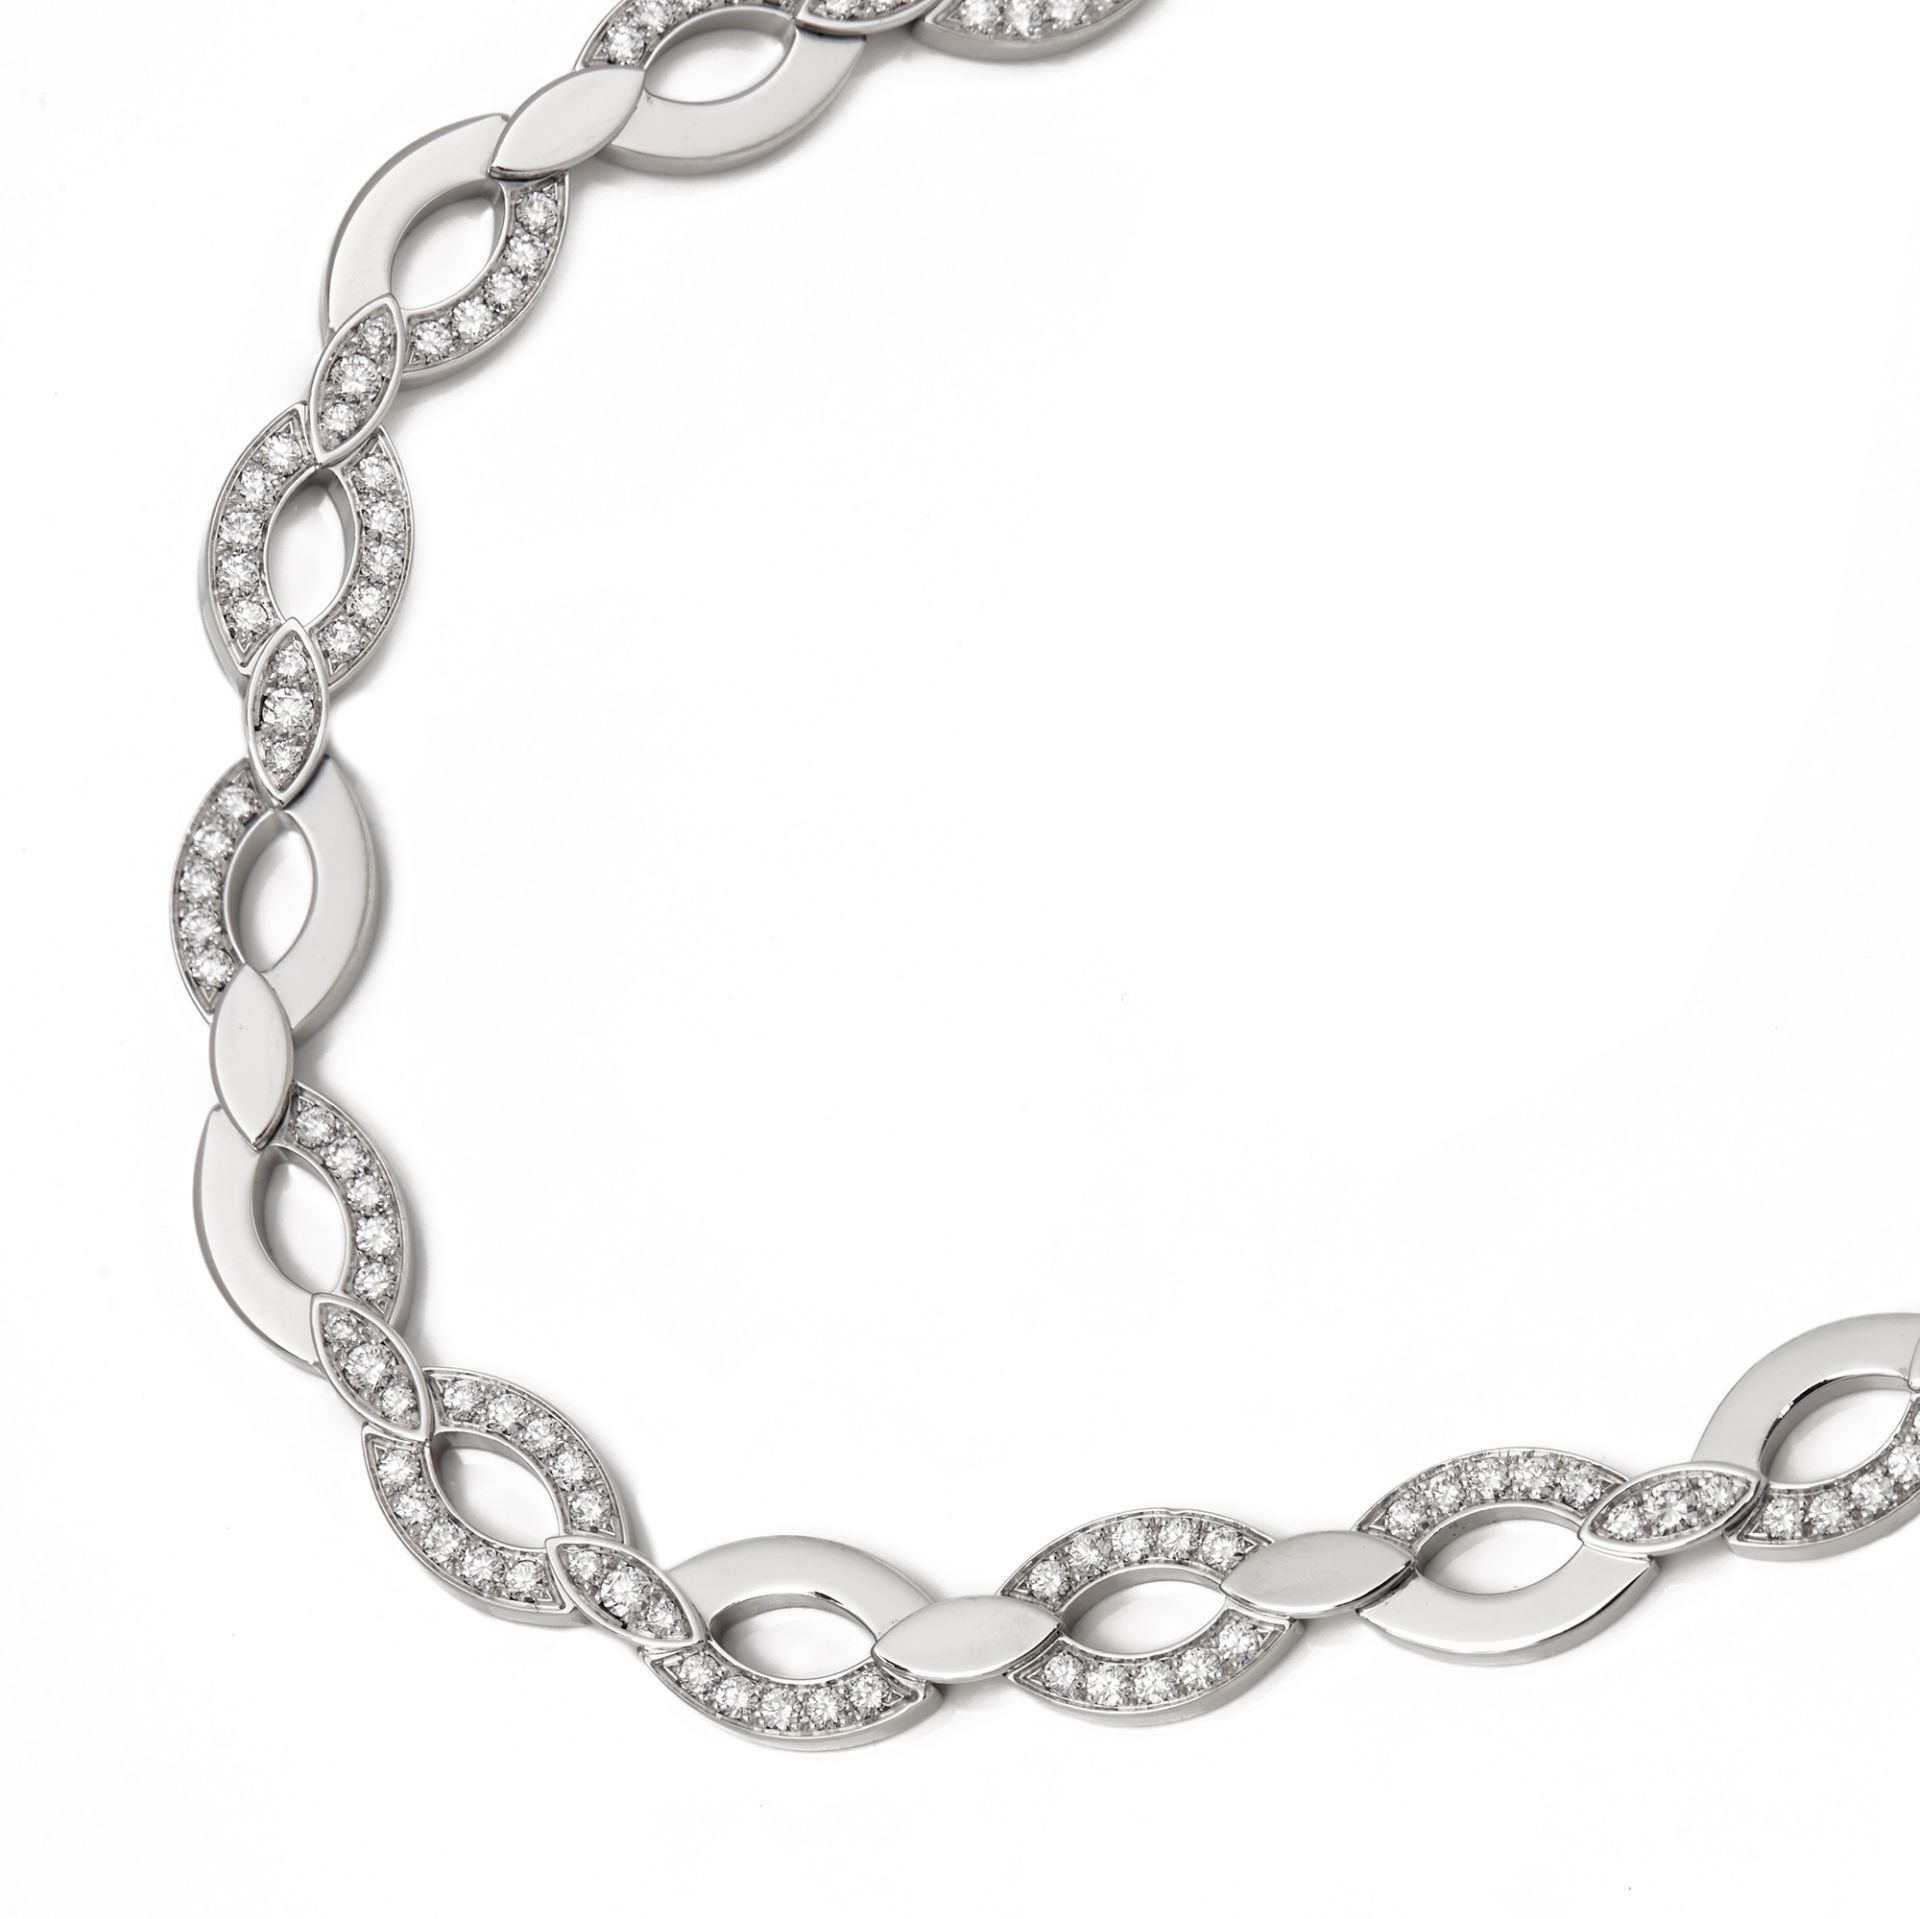 Cartier 18k White Gold Diamond Diadea Necklace - Image 2 of 7